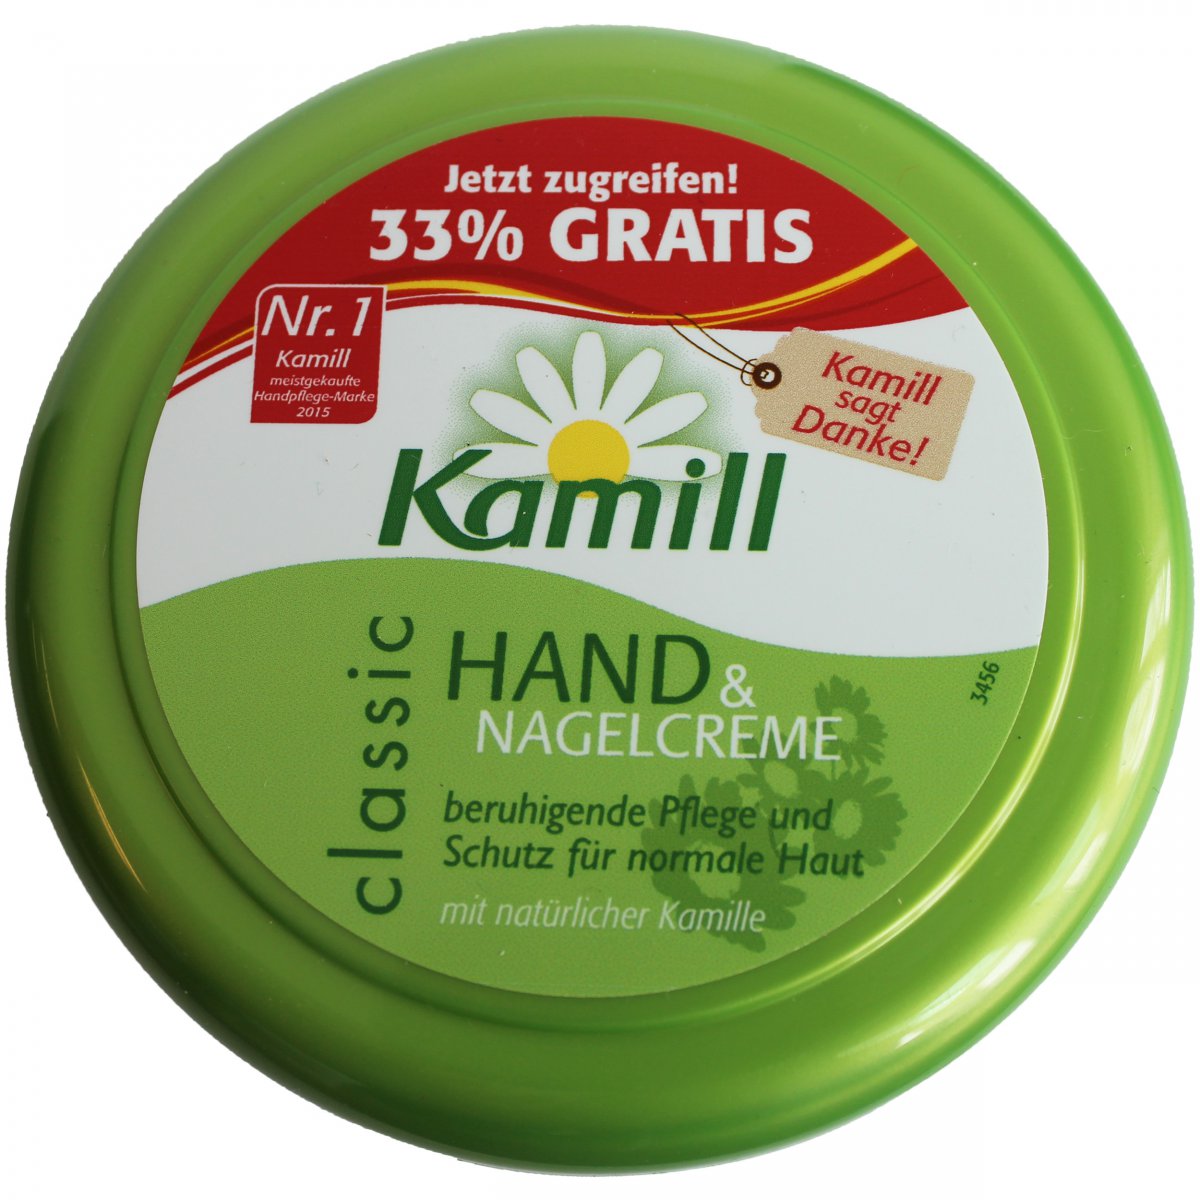 Behoefte aan garen is genoeg Kamill- Classic Hand and Nagel (Nail) Cream Tub | European Grocery